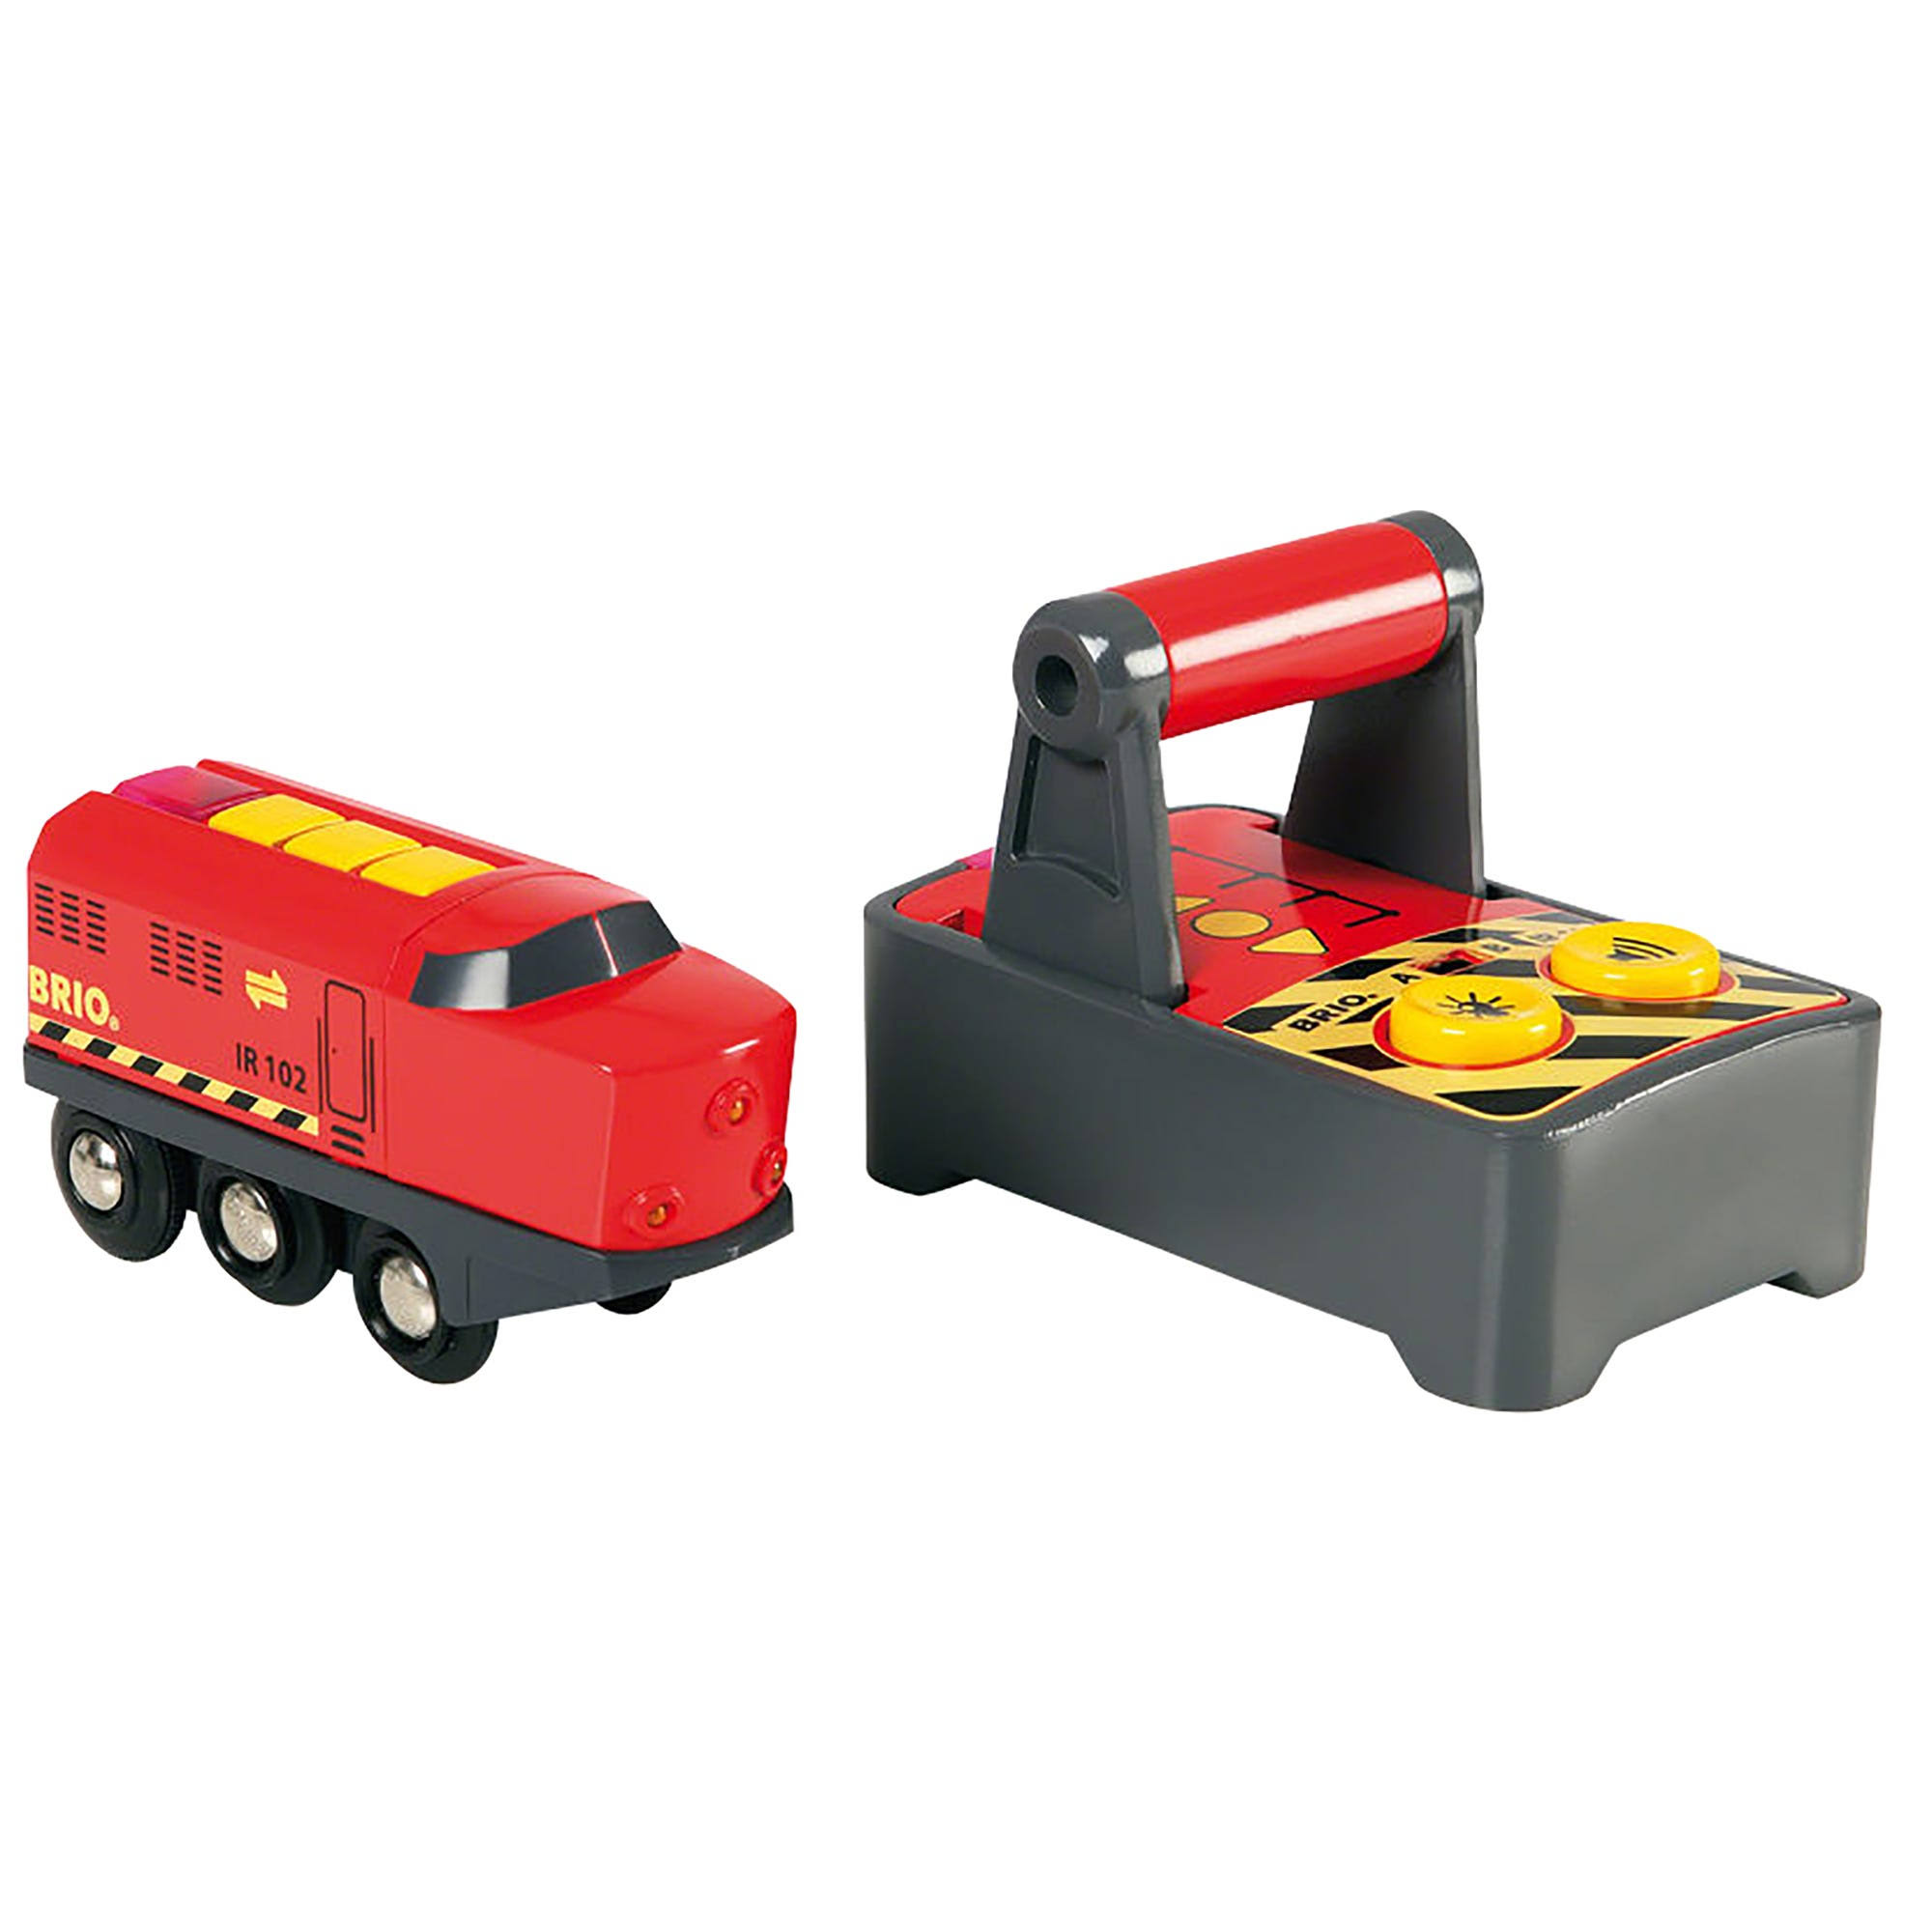 Brio Remote Control Engine Toddler Toy - Railway Train